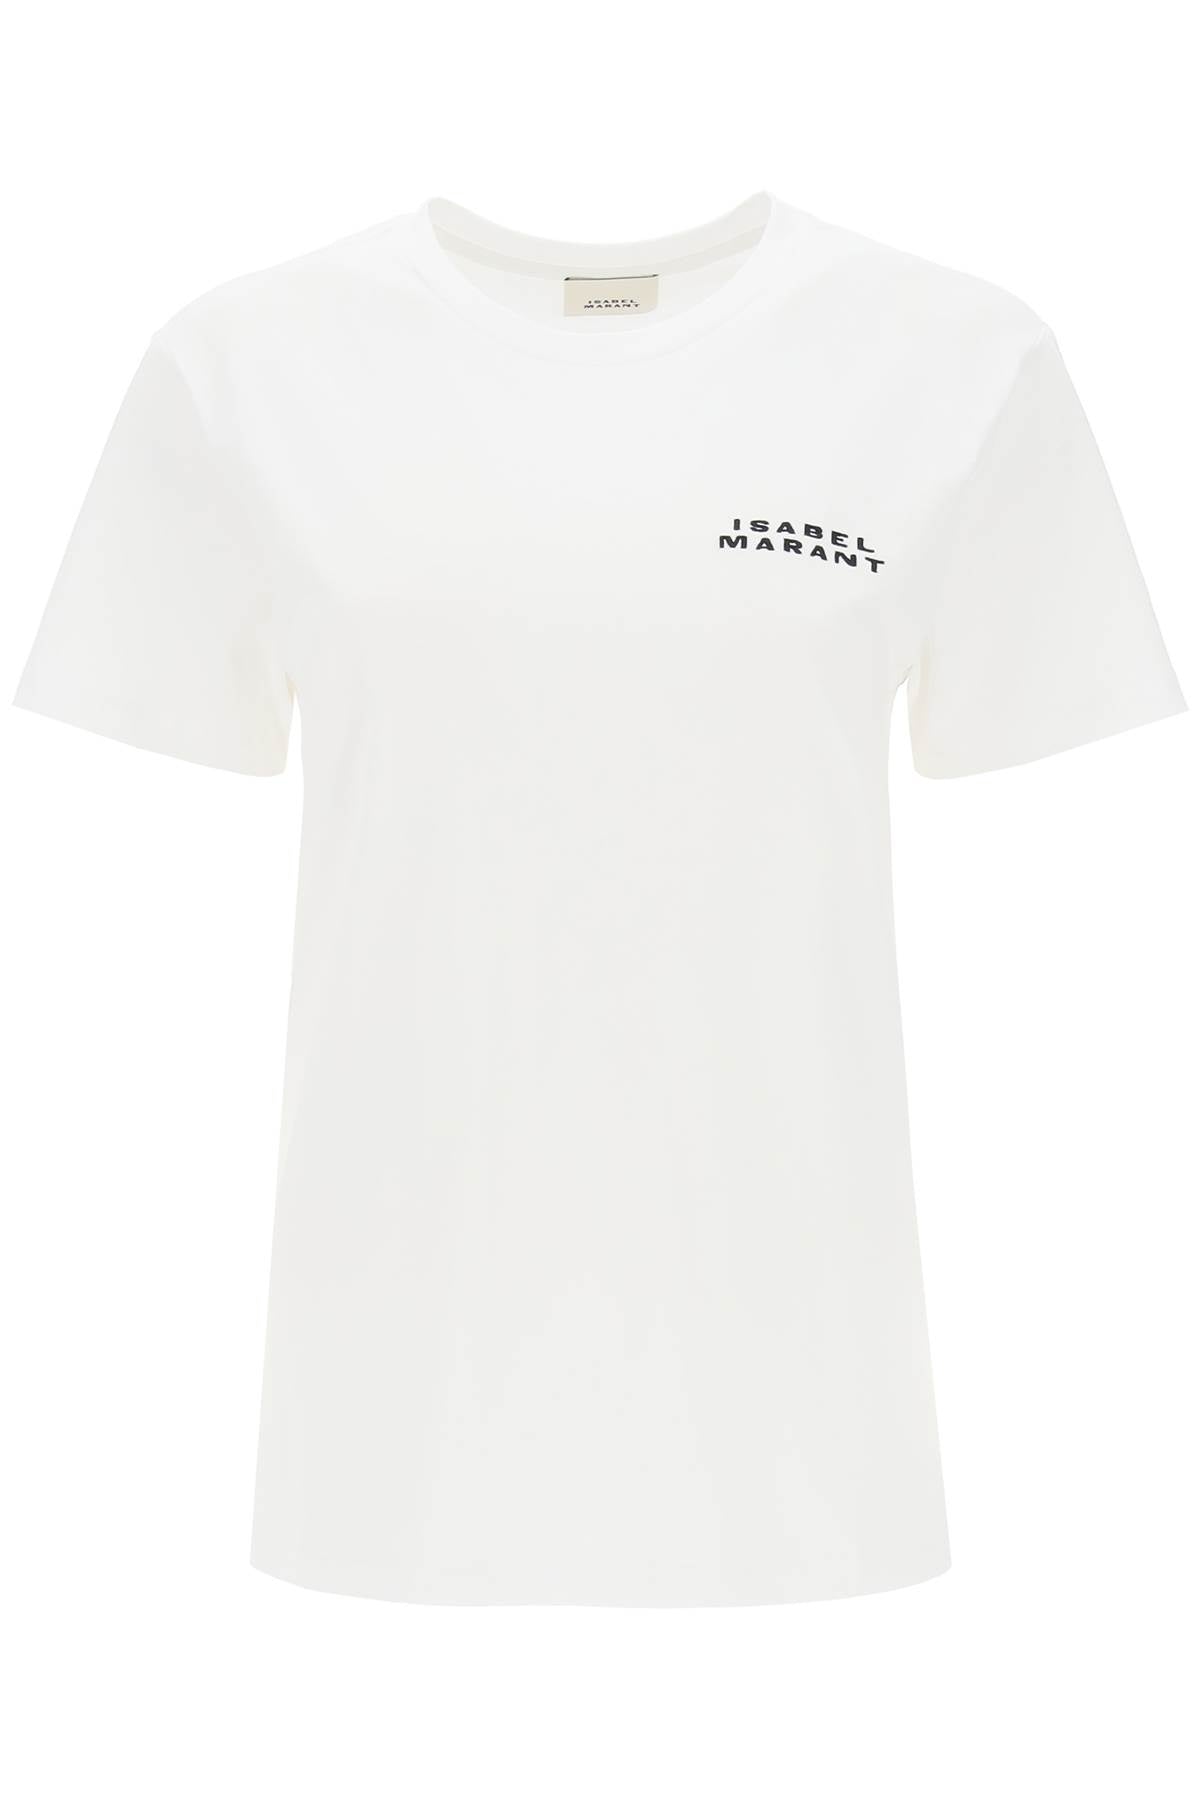 vidal crew-neck t-shirt-0